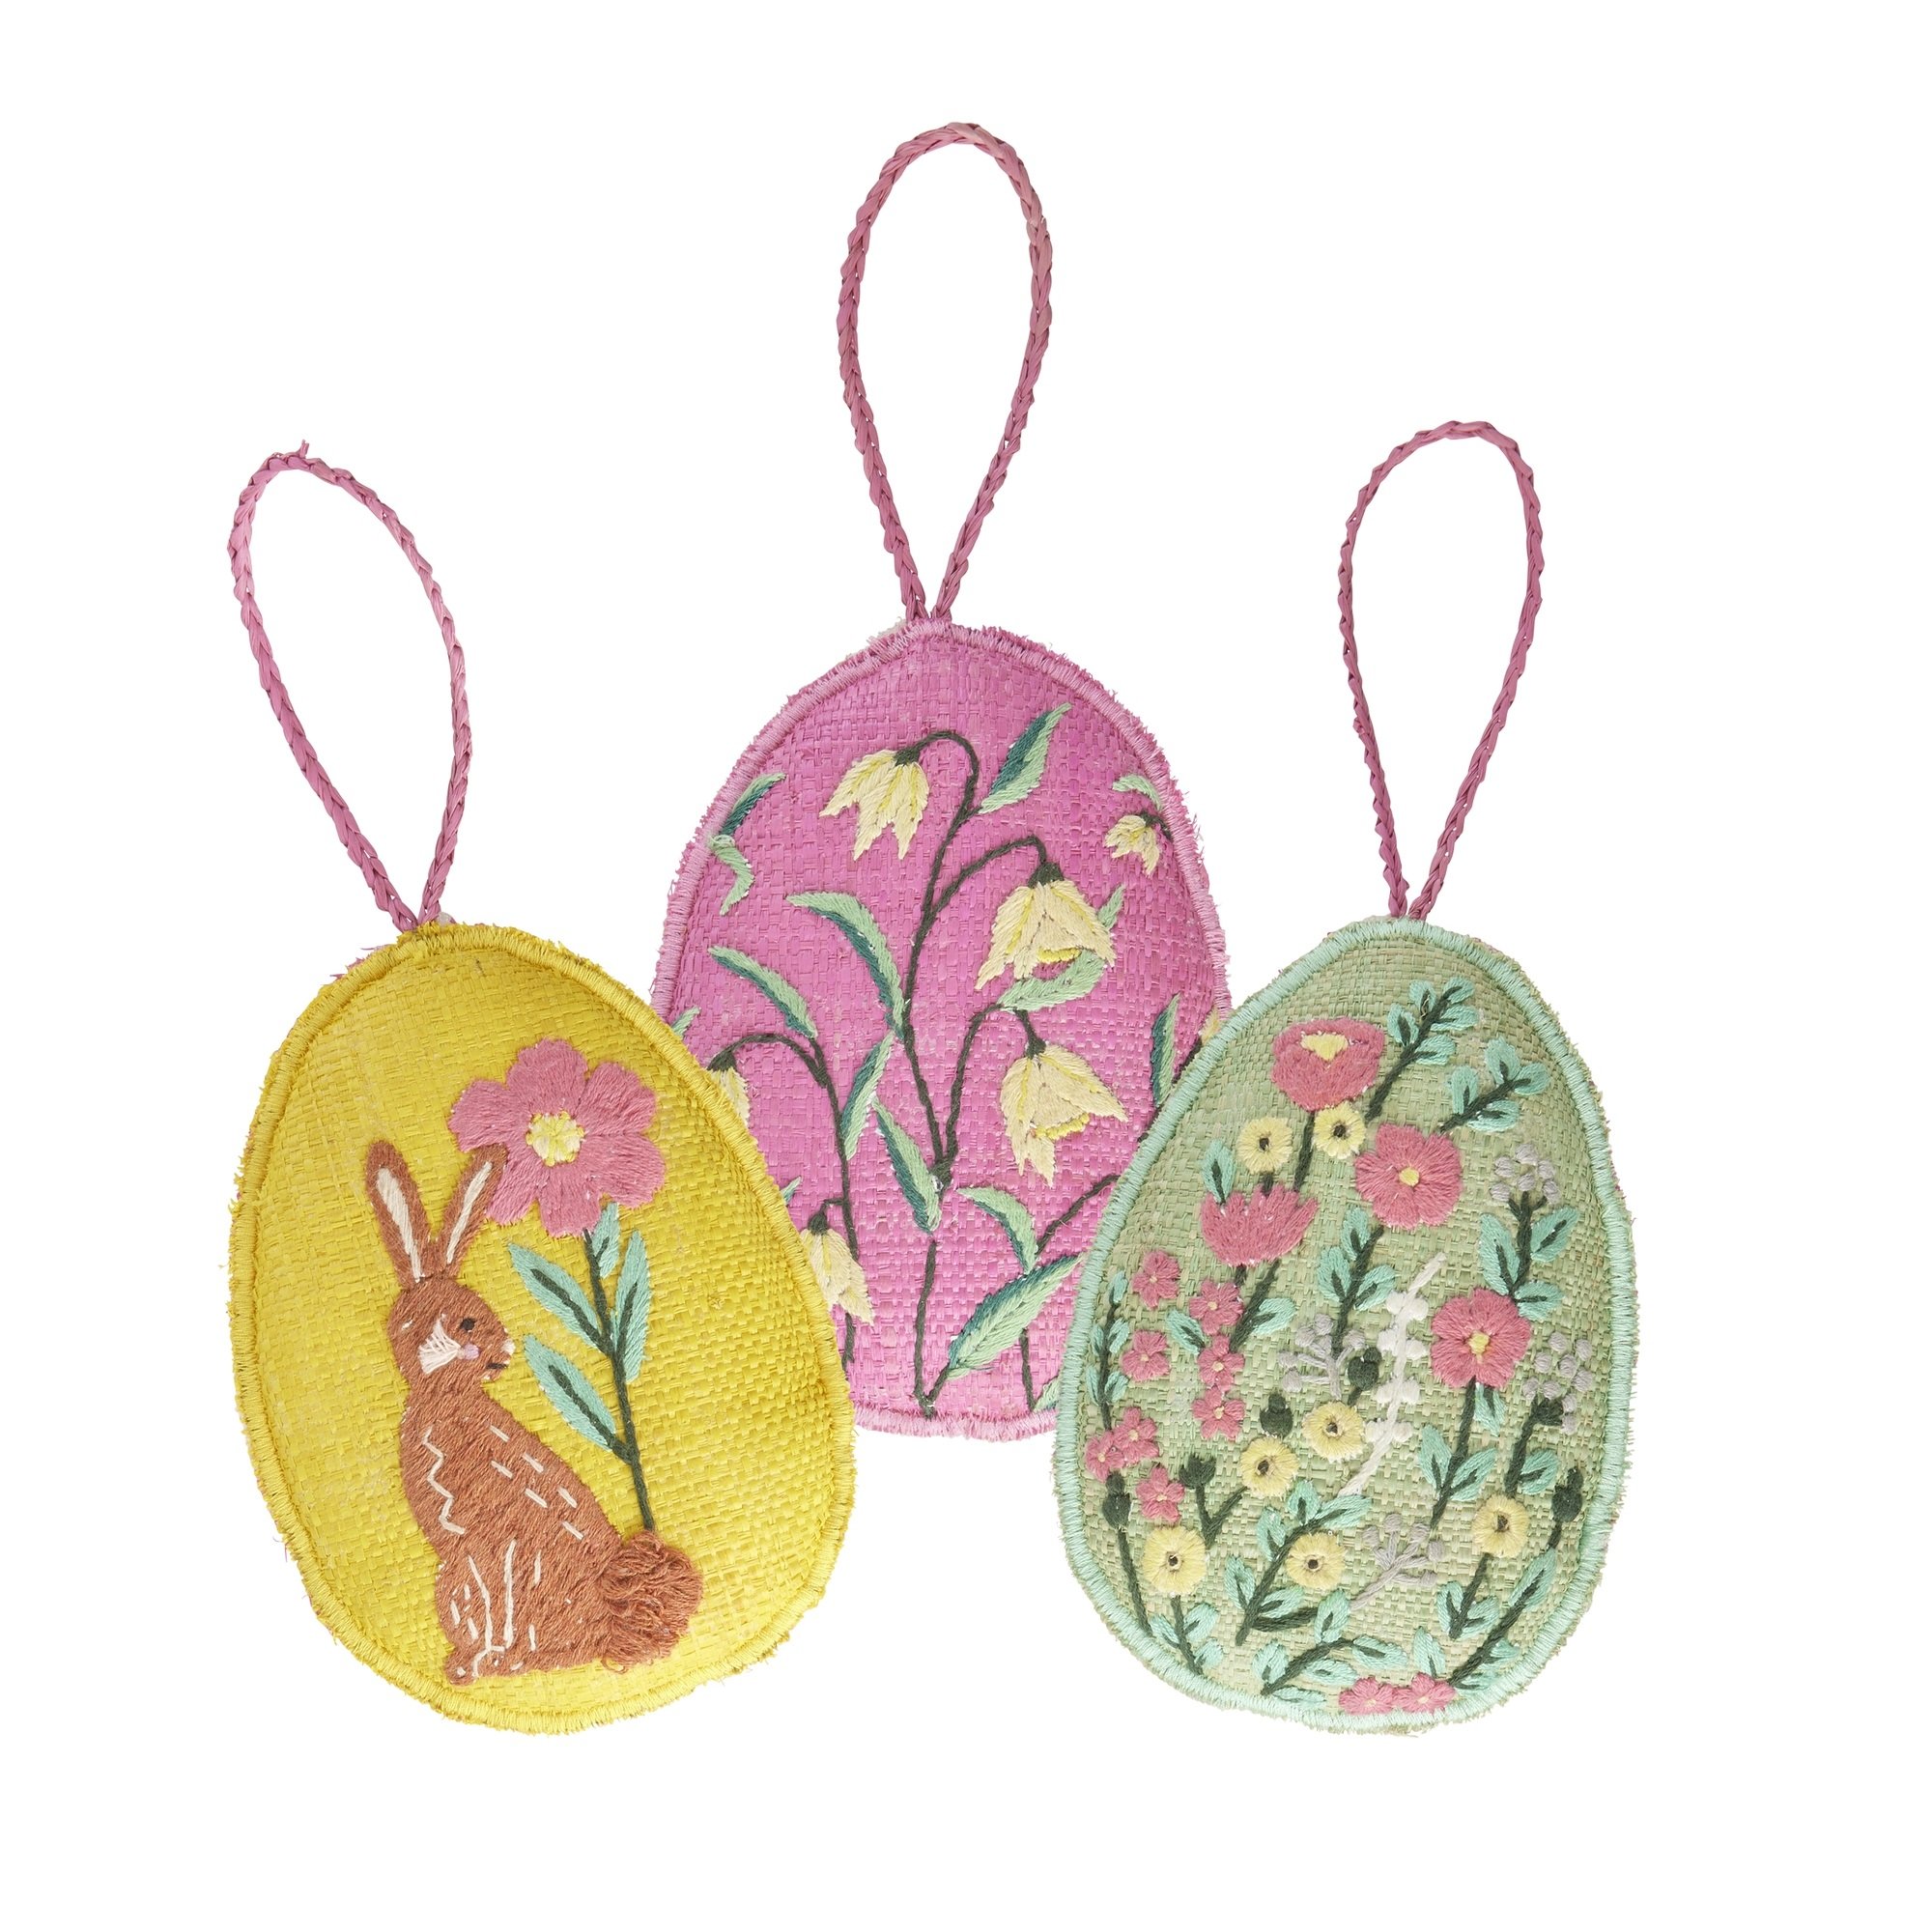 Rice - Raffia Large Easter Eggs Ornaments 3 Asst. Designs with Embroidery Pink/Yellow/Green - Hjemme og kjøkken